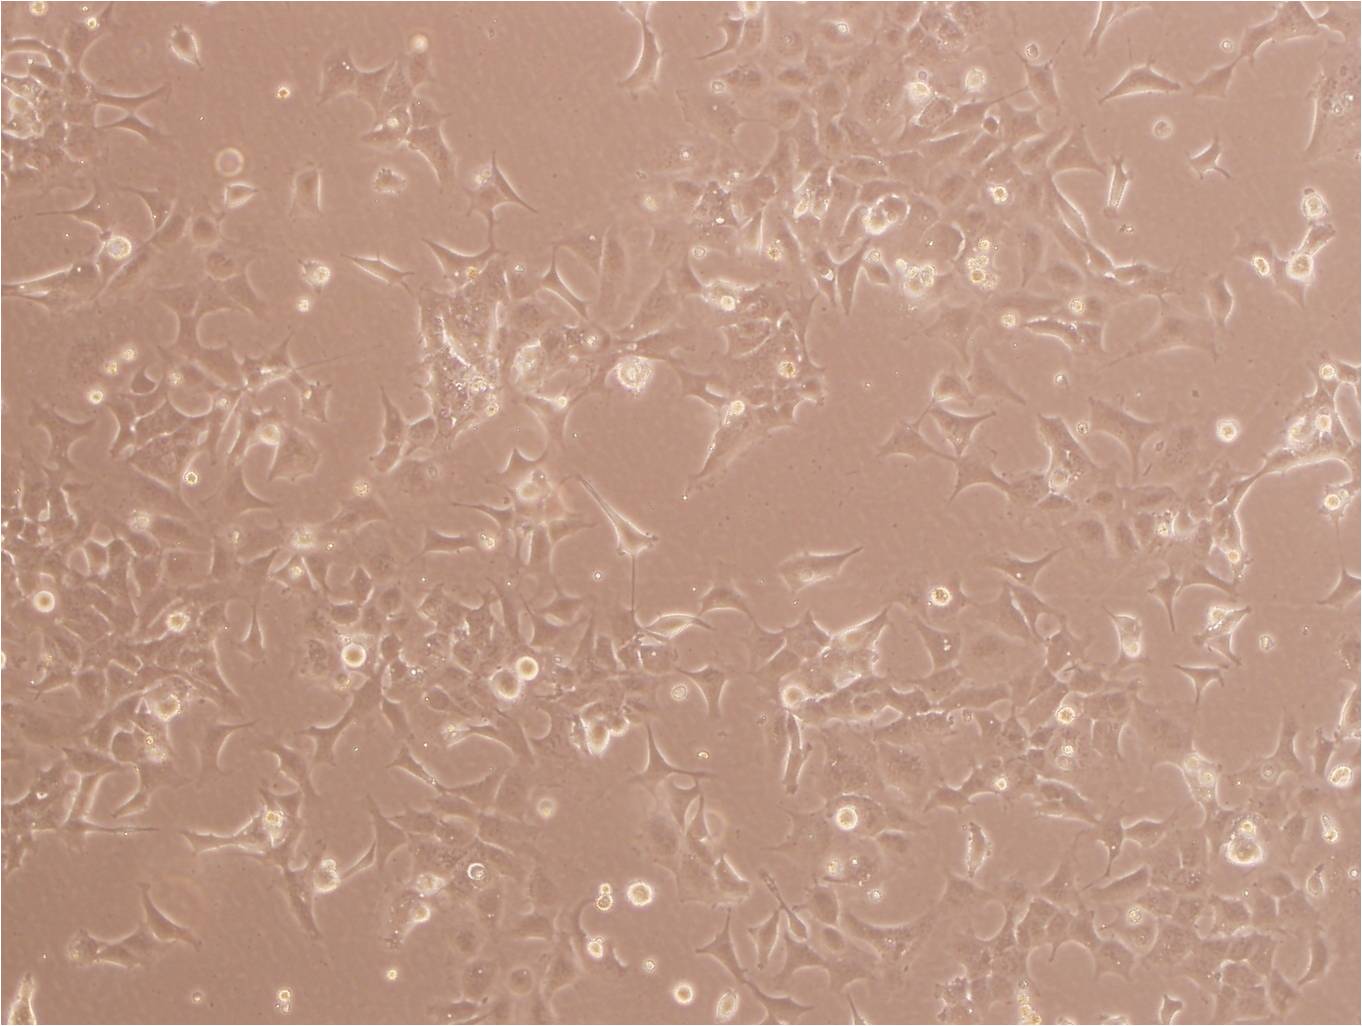 NCI-H1155 Cells|人非小细胞肺癌可传代细胞系,NCI-H1155 Cells